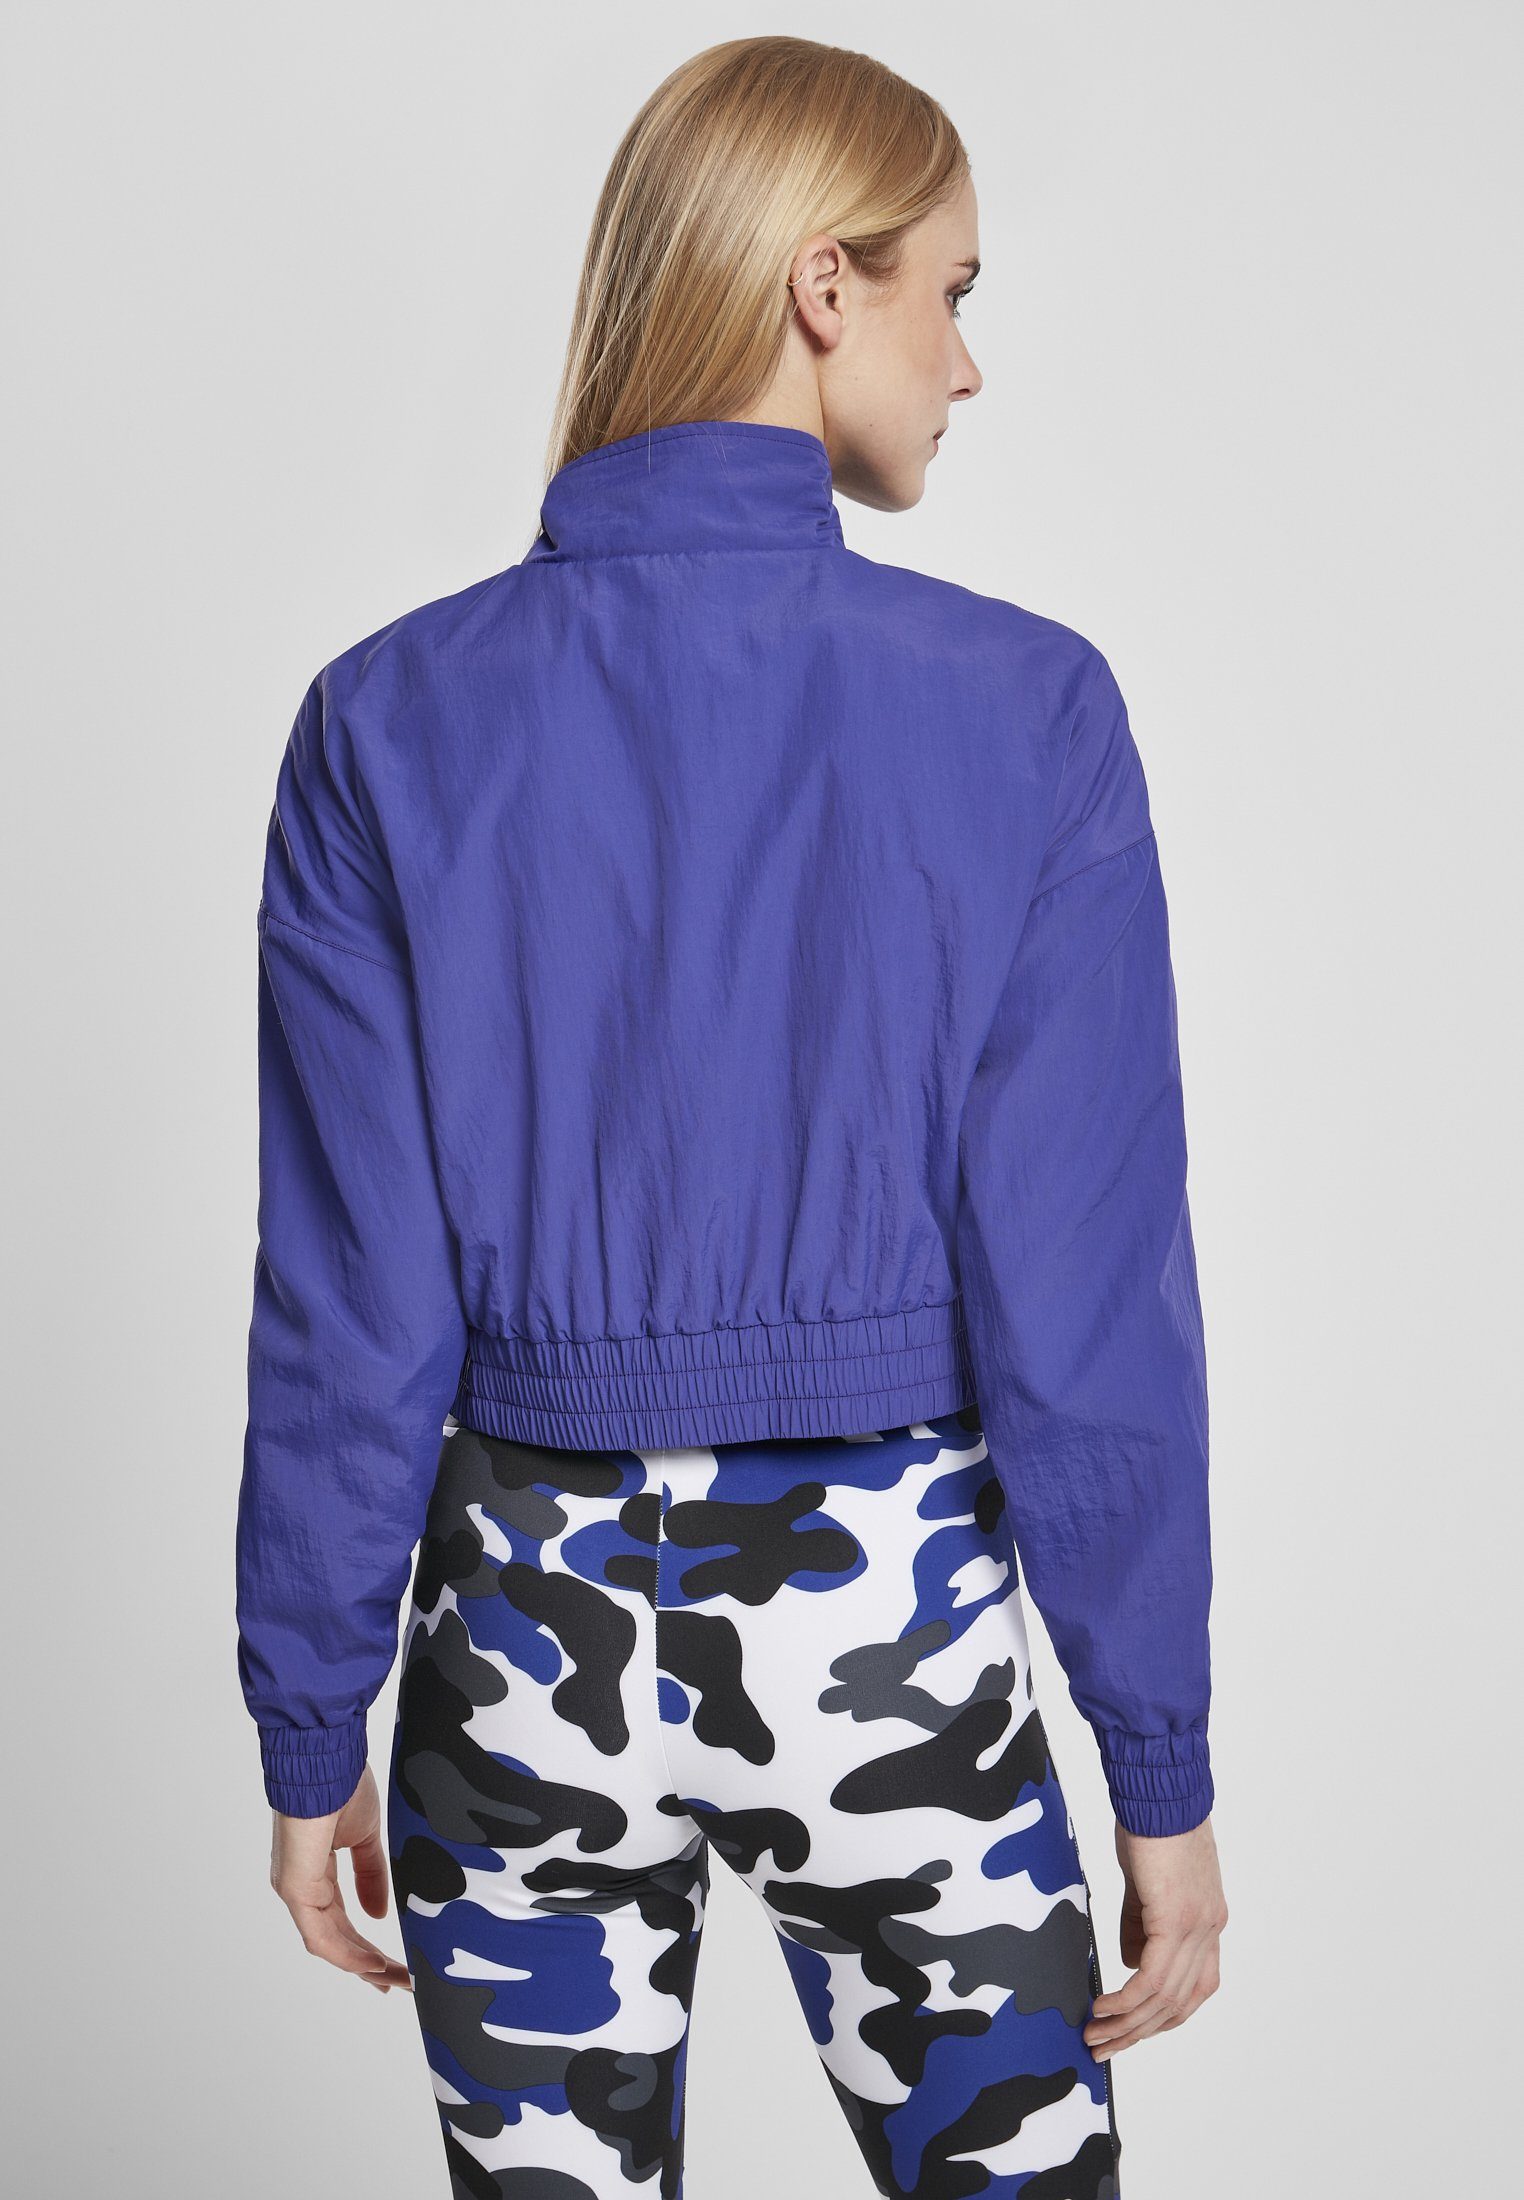 Frauen Ladies CLASSICS URBAN Crinkle (1-St) Outdoorjacke Cropped Jacket Nylon Pull Over bluepurple